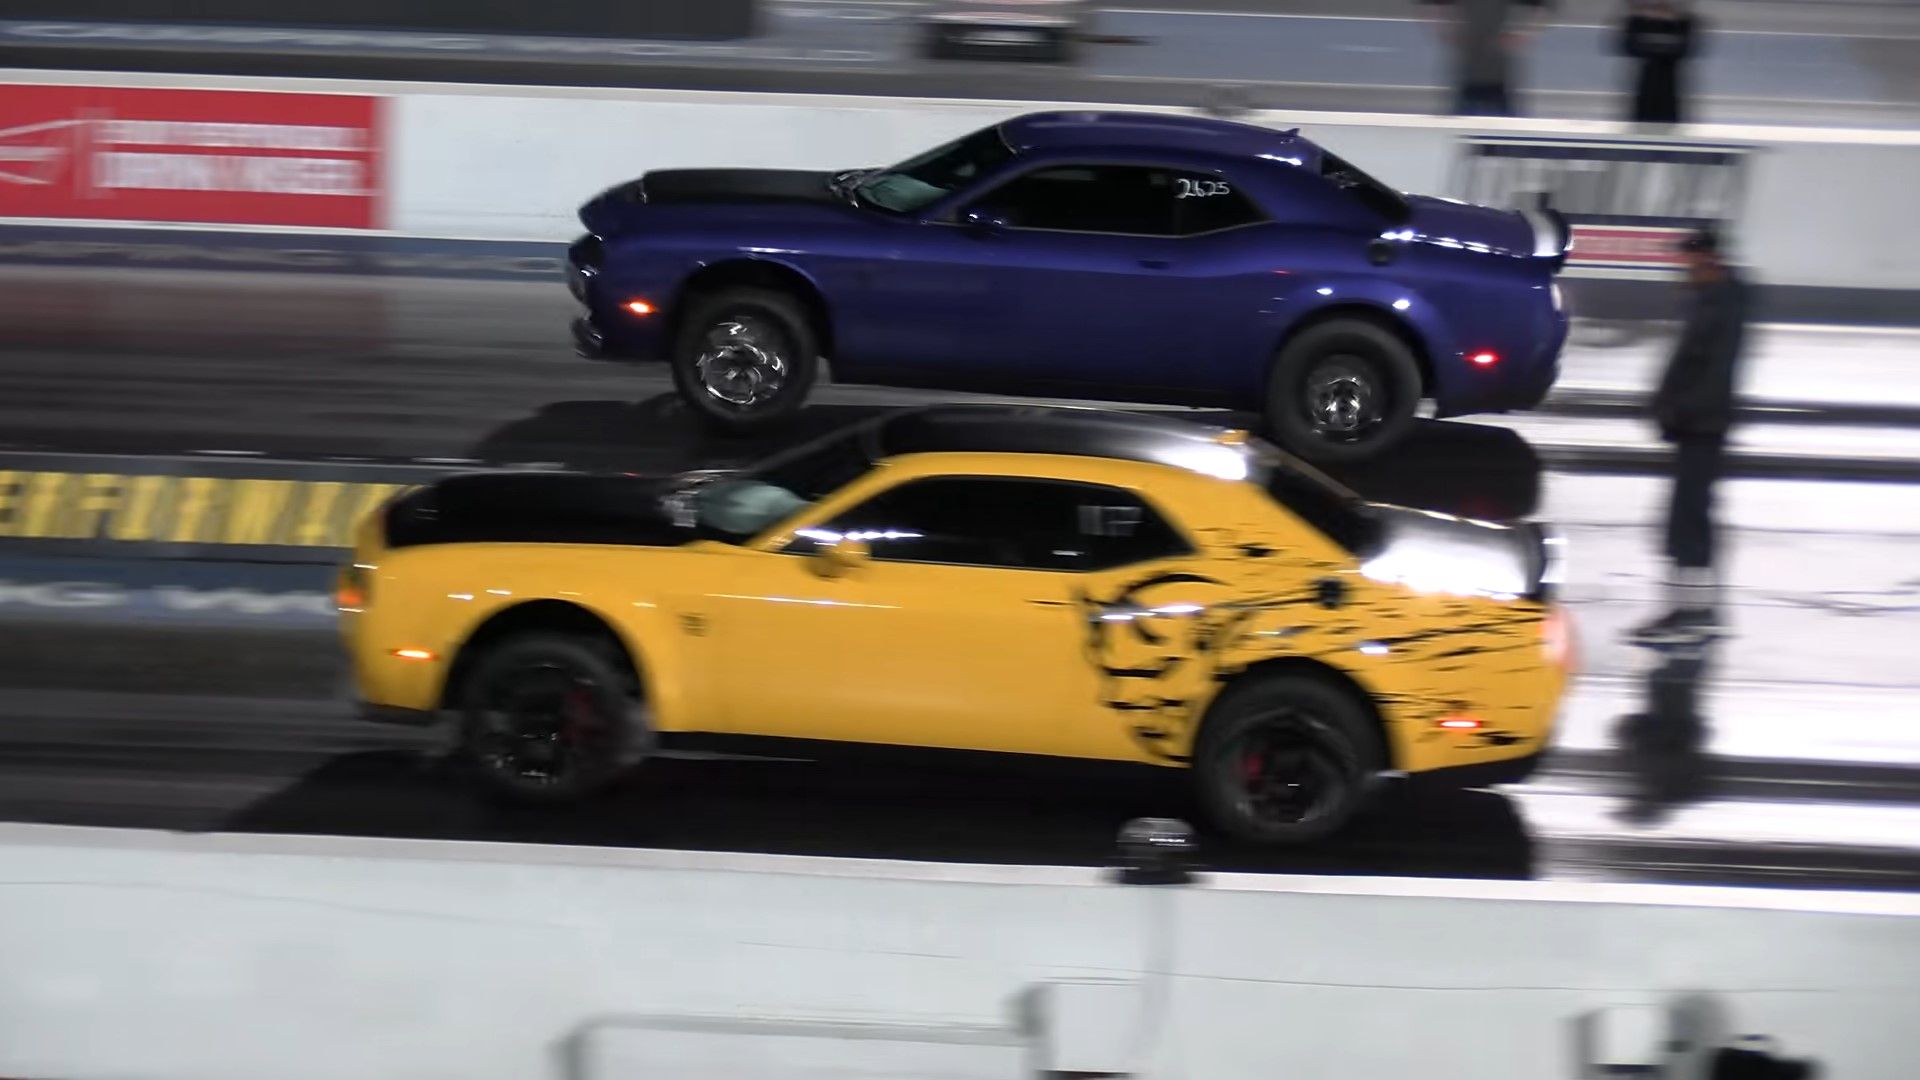 A yellow 2018 Dodge Demon vs a Purple 2023 Dodge Demon 170 drag racing side shot